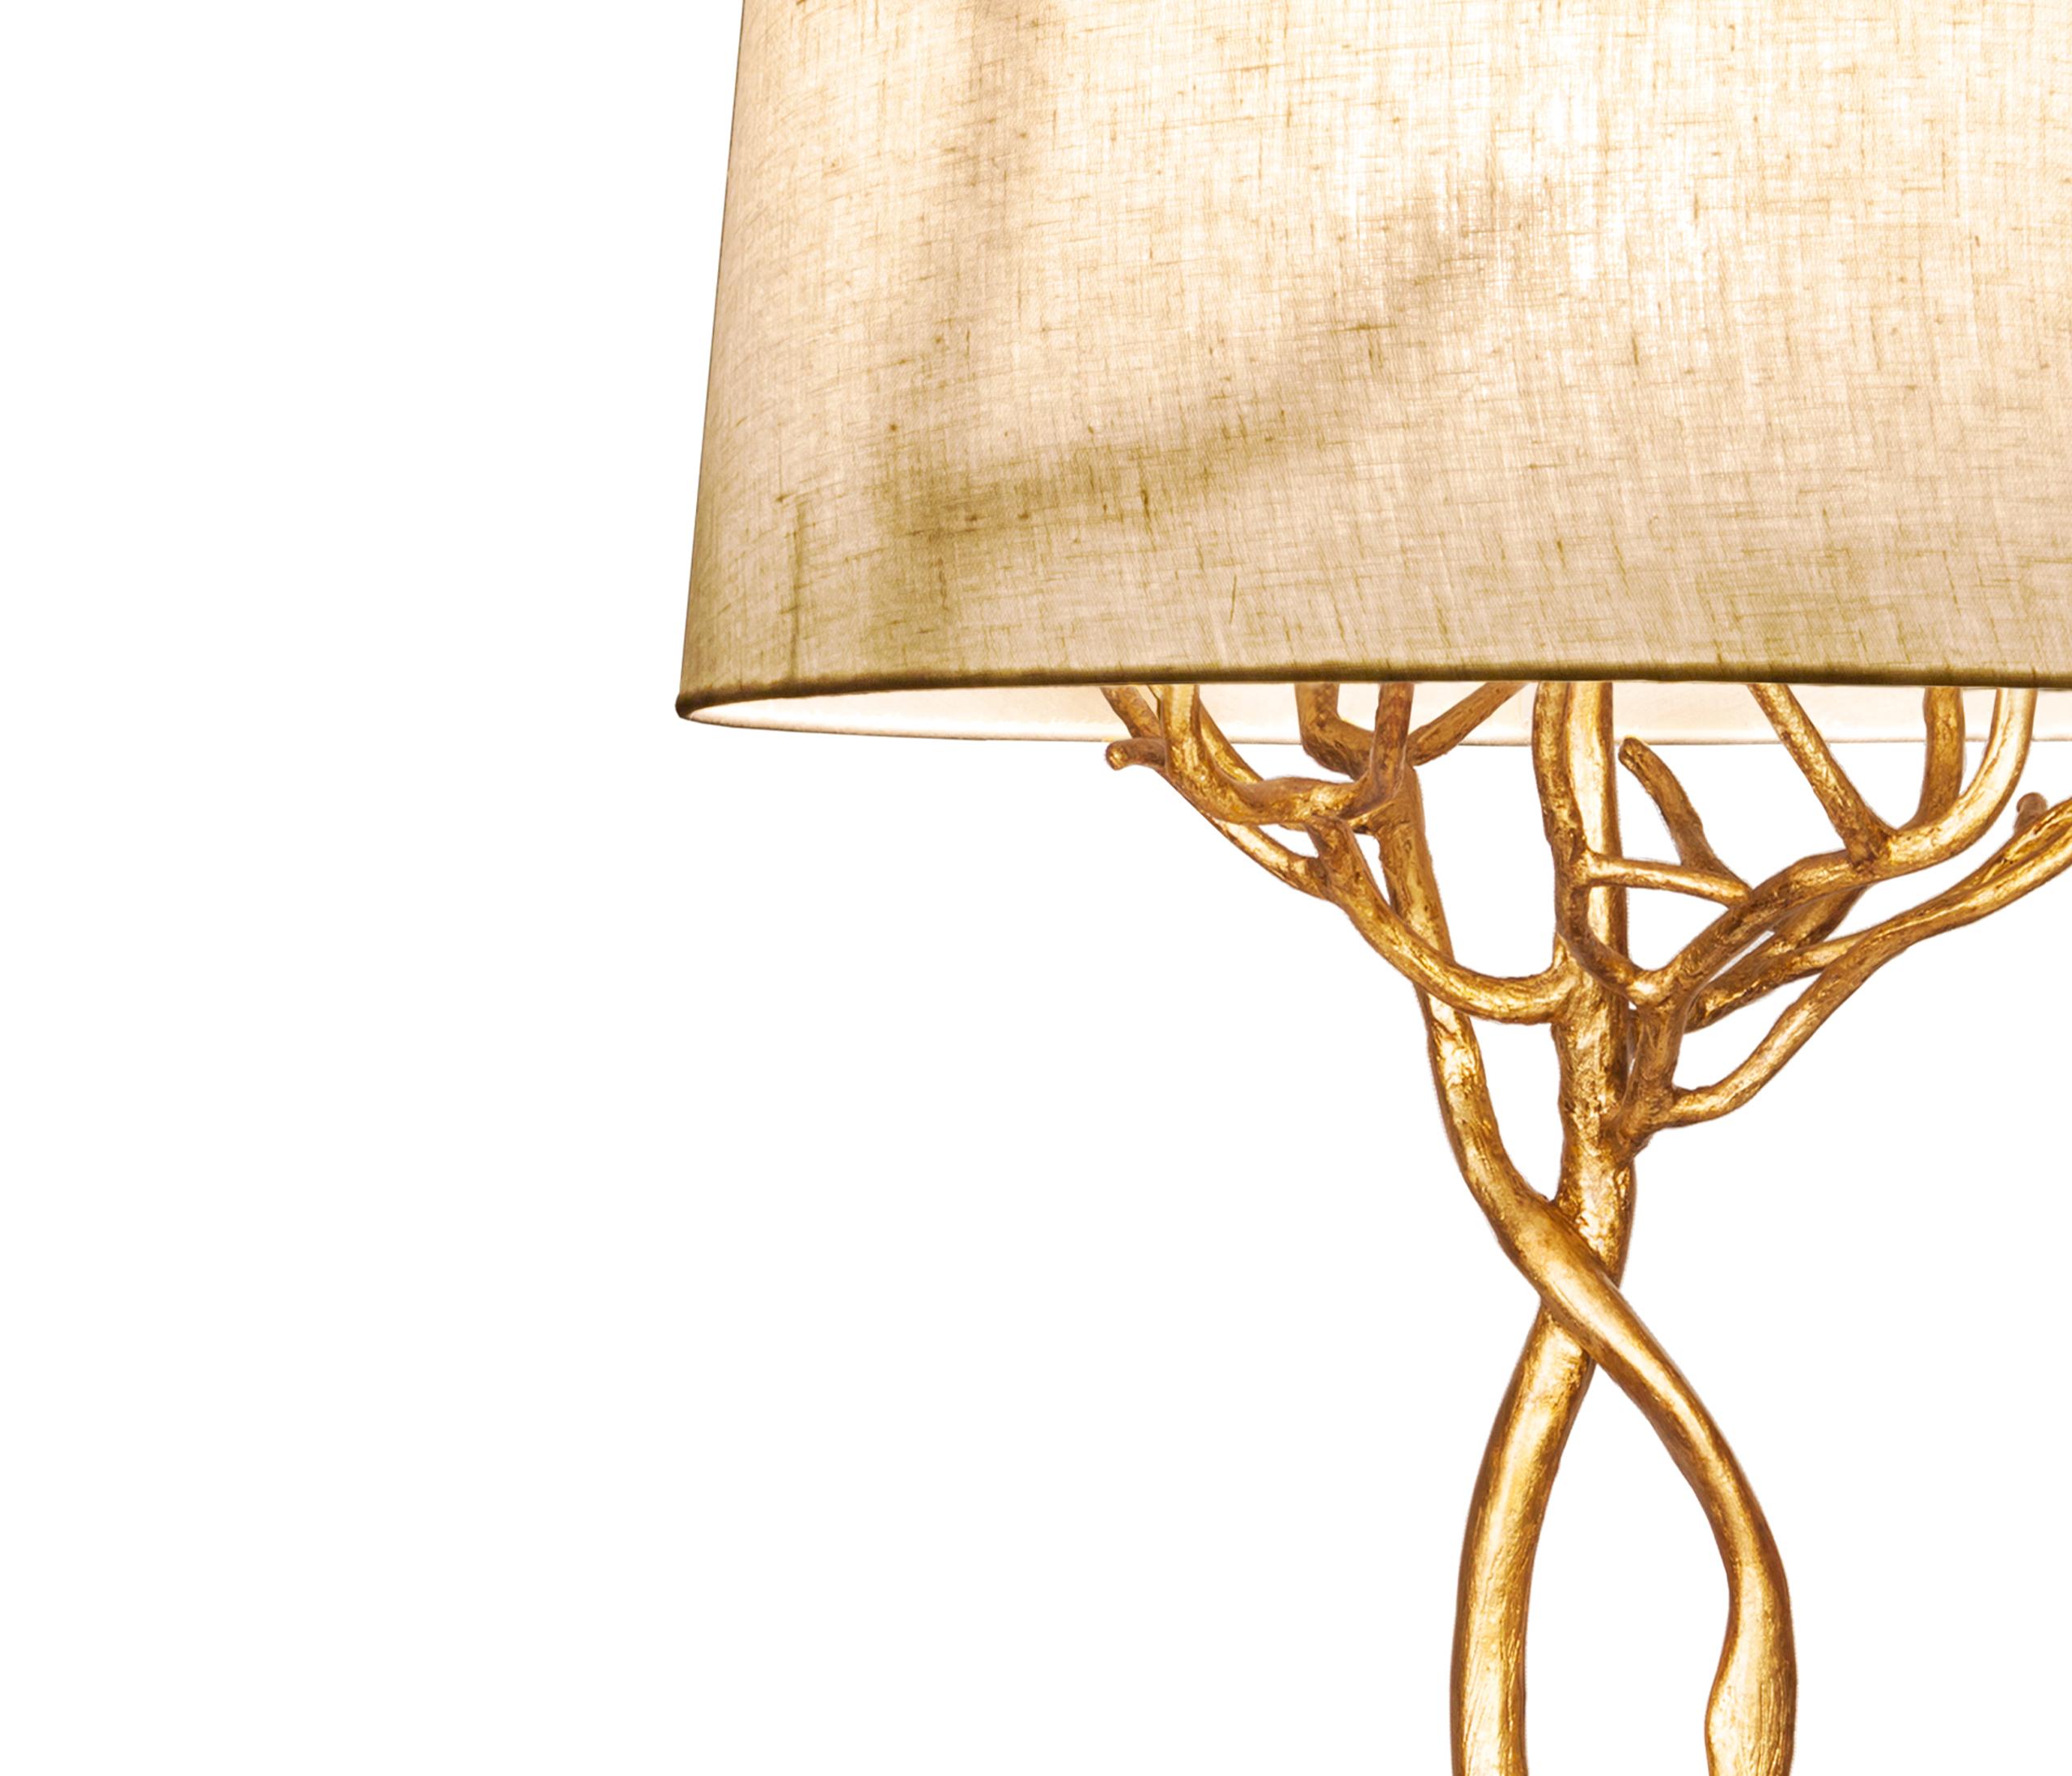 German Organic Table Lamp “Etna” in Antique Gold Finish, Benediko For Sale